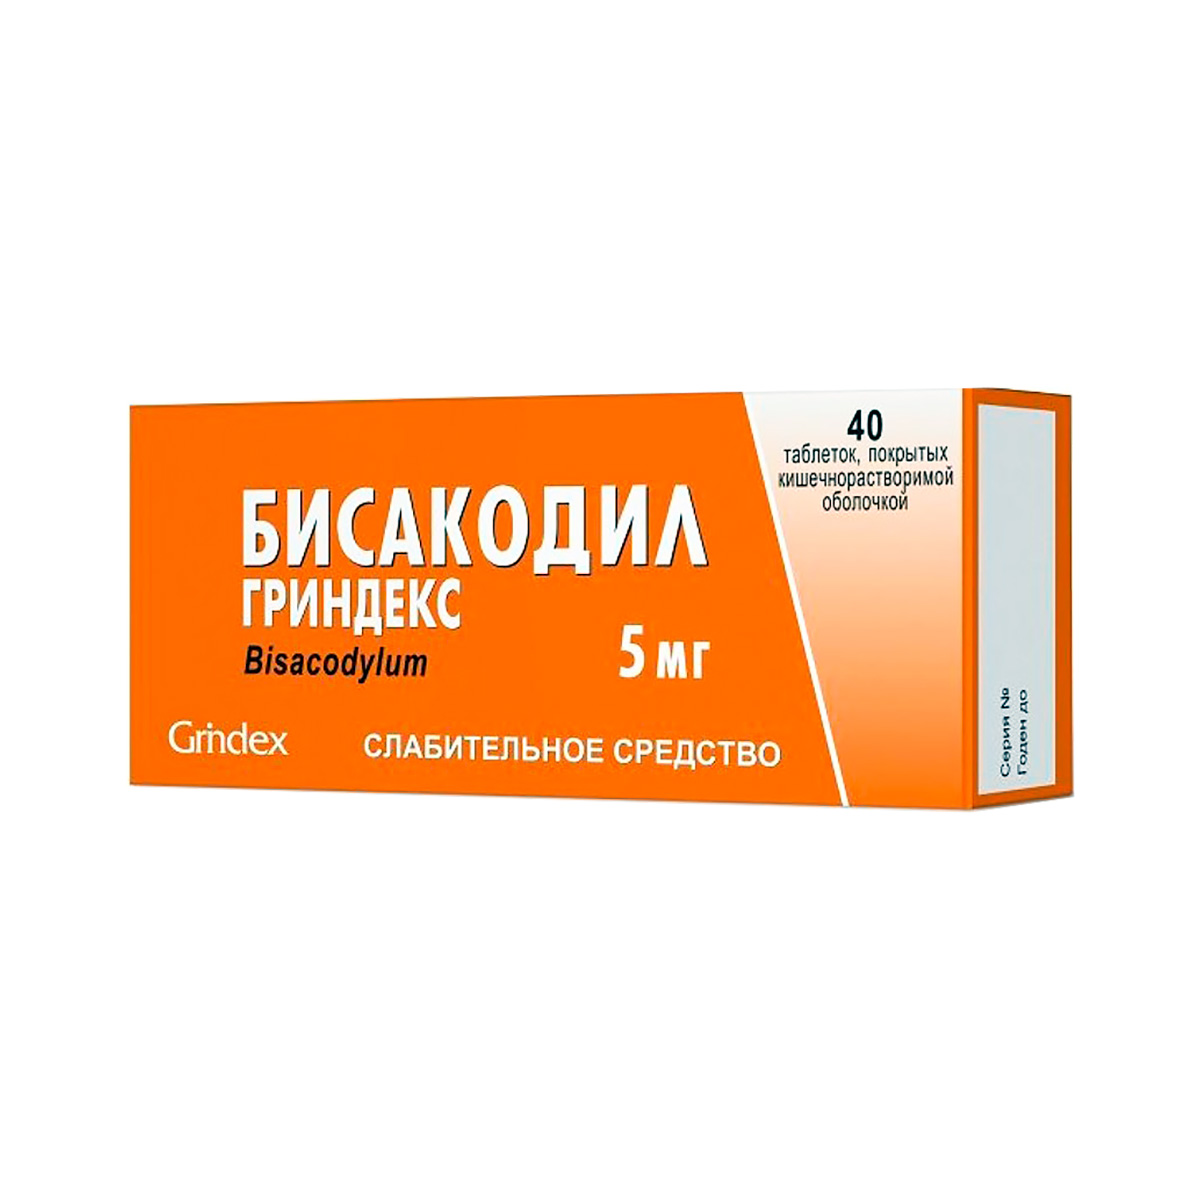 Бисакодил Гриндекс 5 мг таблетки кишечнорастворимые 40 шт